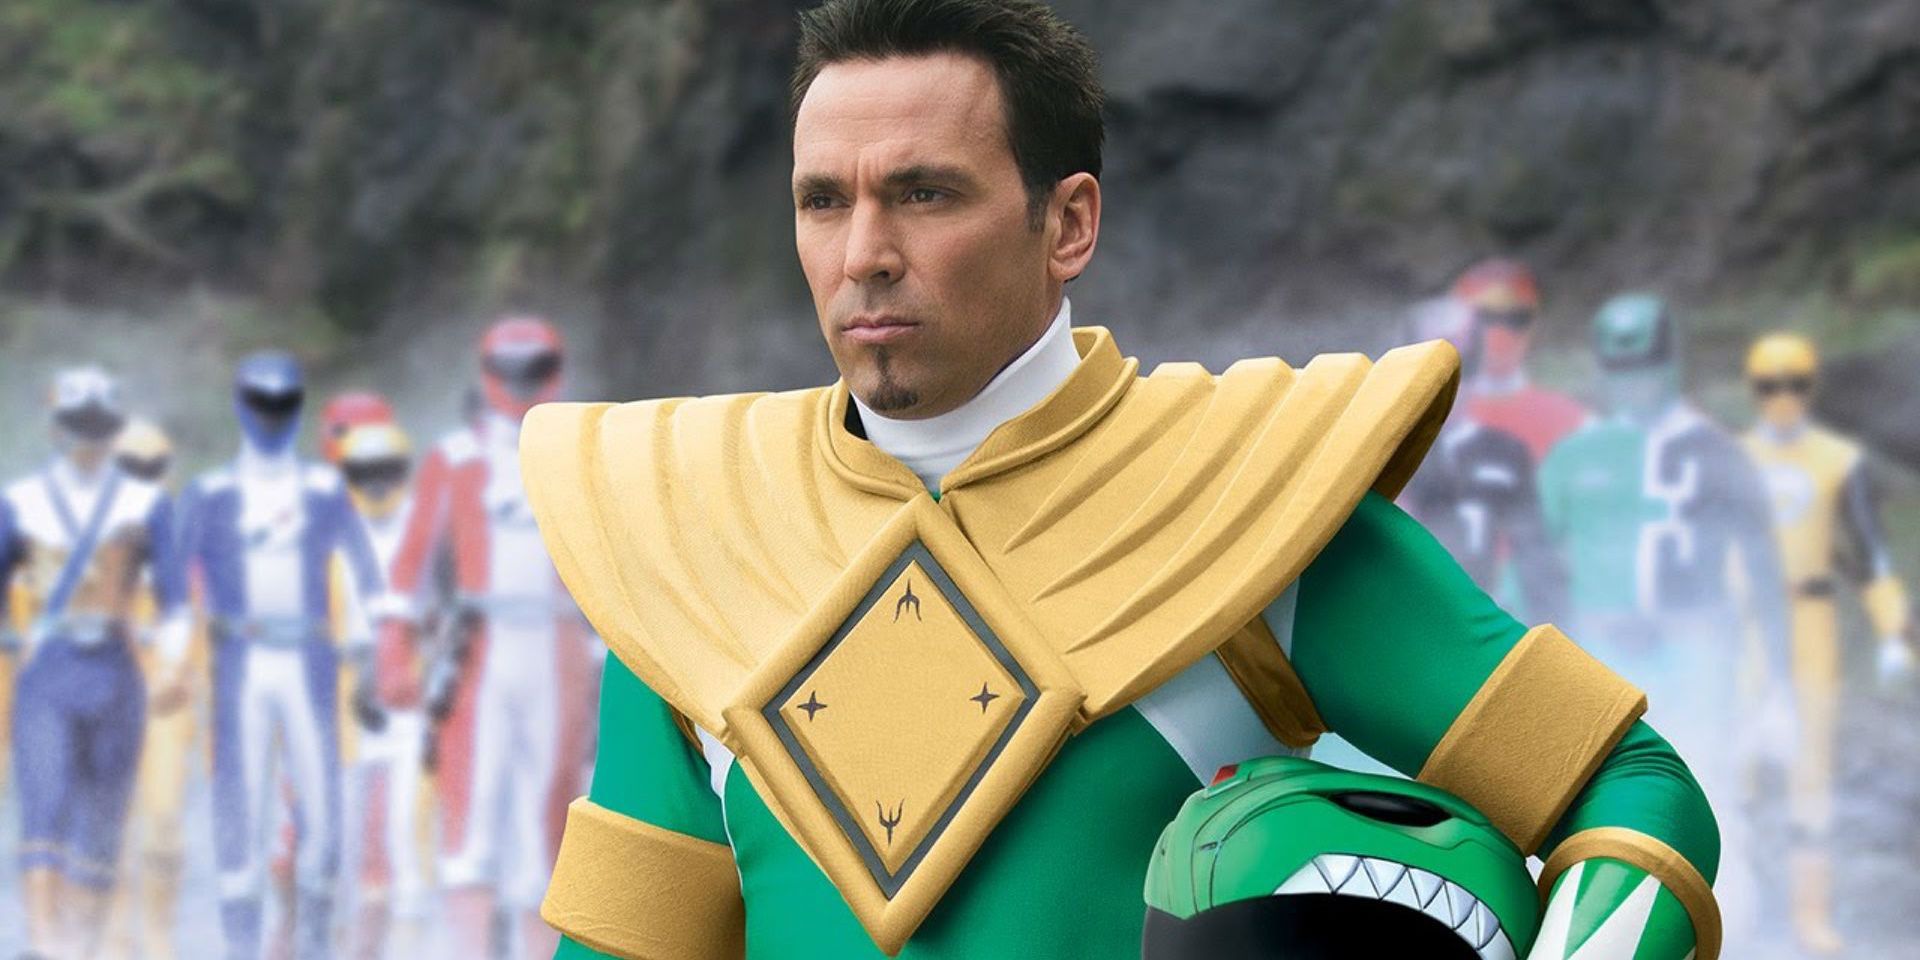 Jason David Frank as the Green Power Ranger